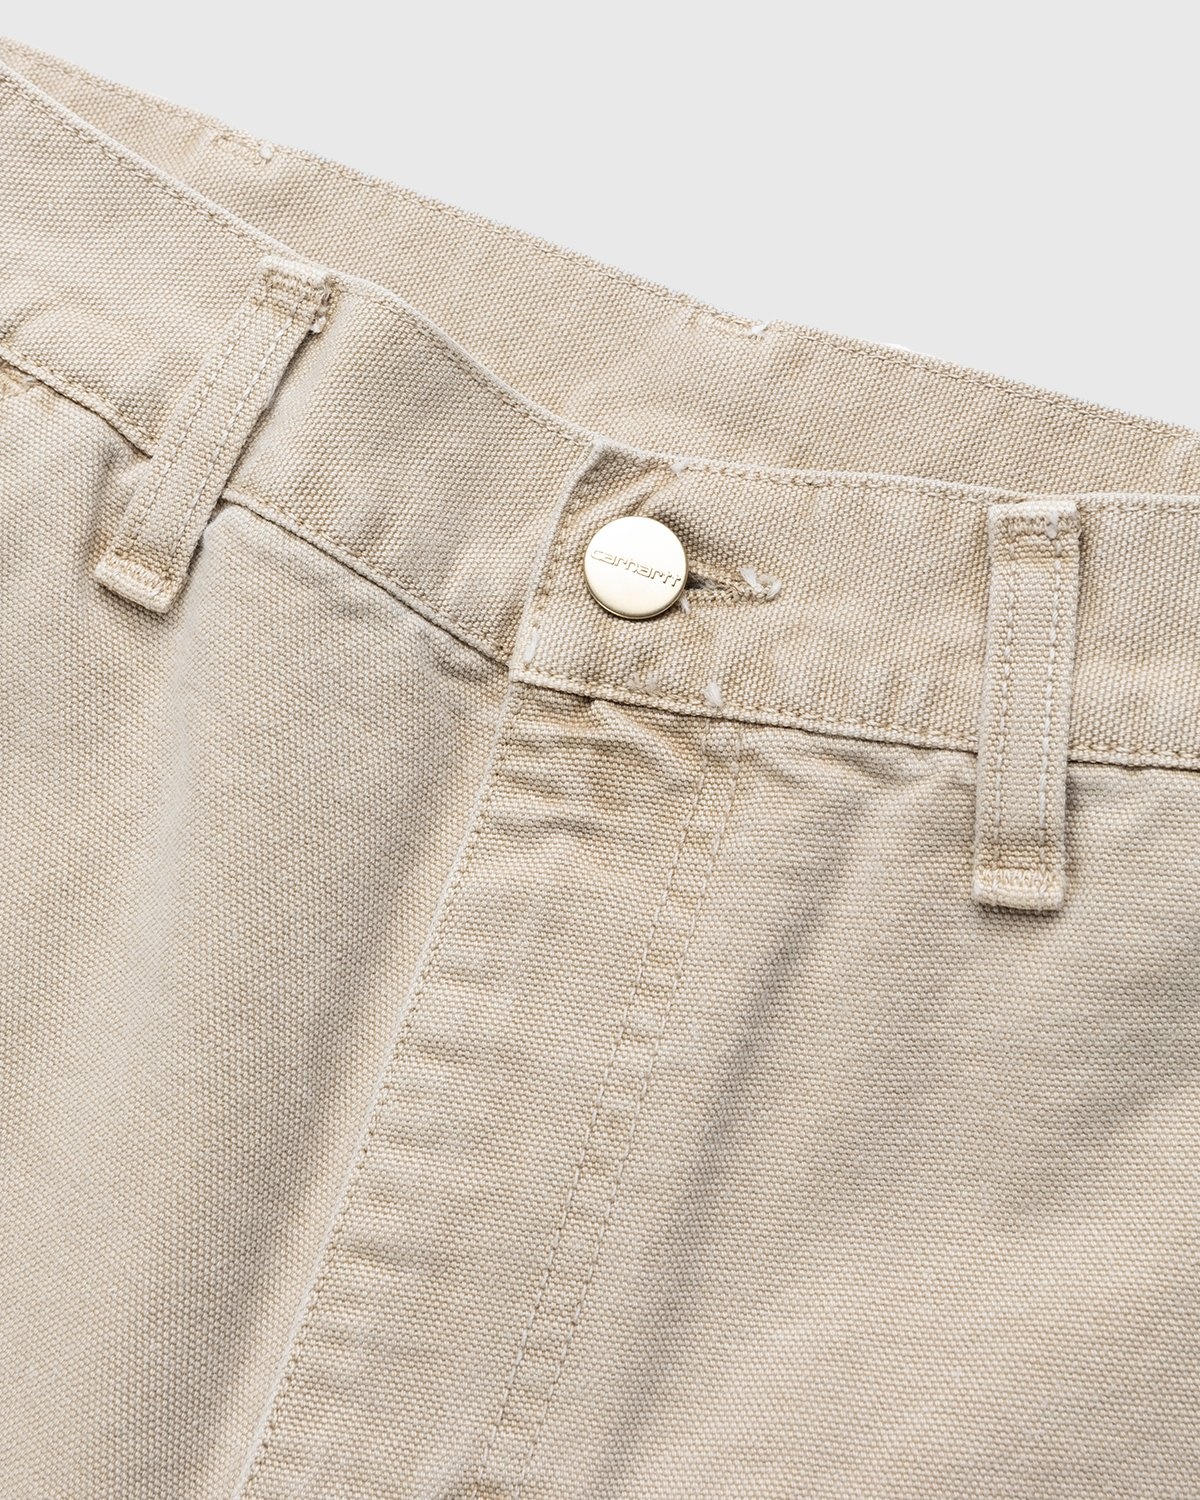 Carhartt WIP – Single Knee Short Dusty H Brown - Shorts - Brown - Image 3